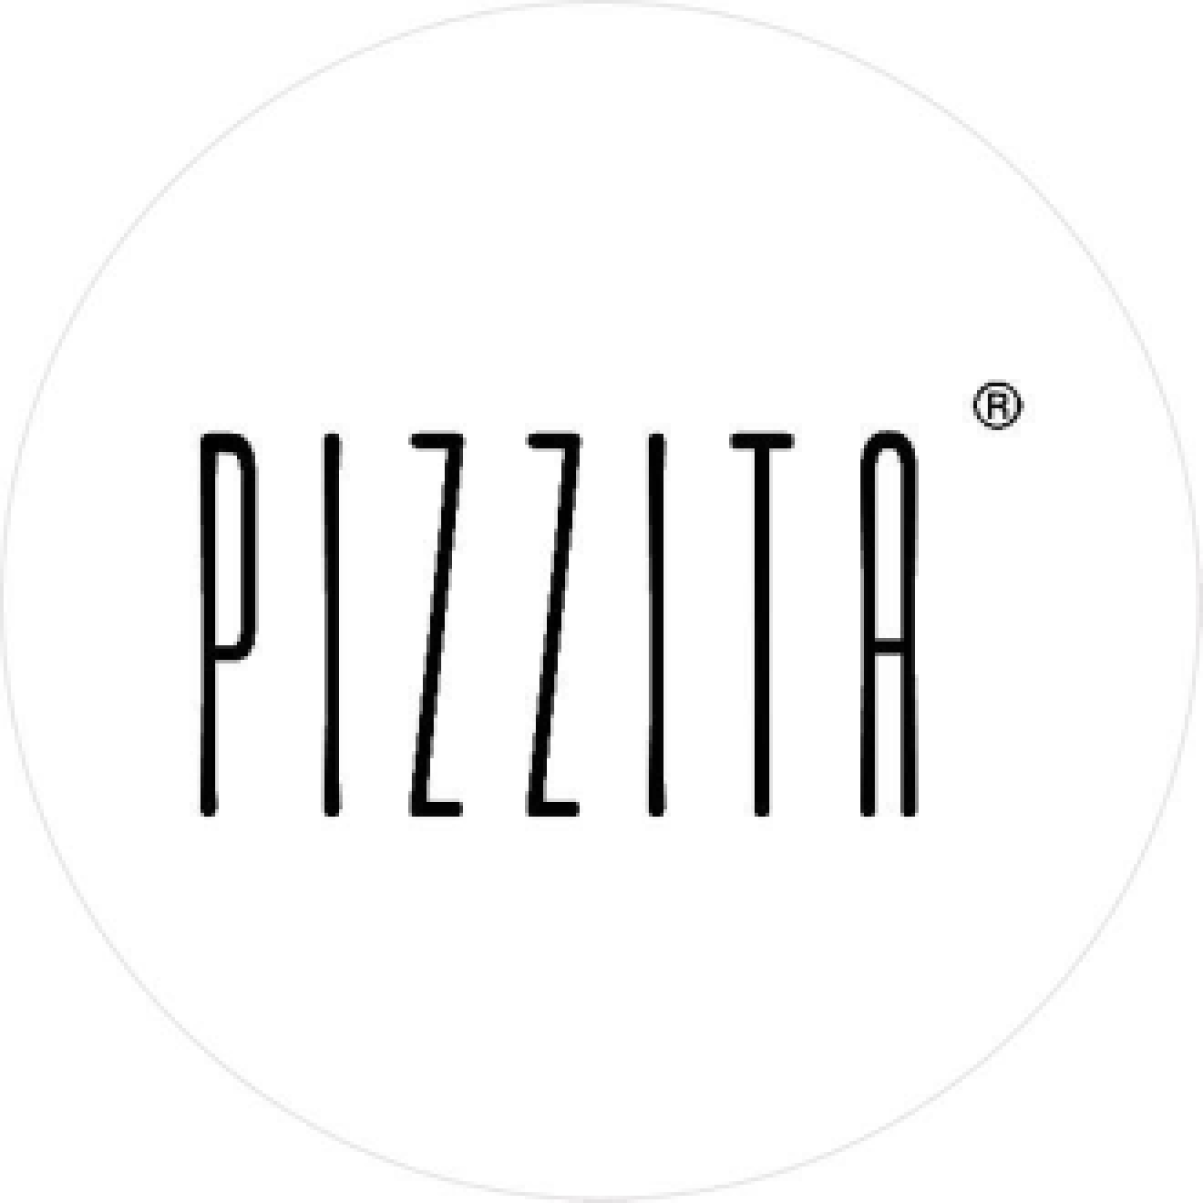 Pizzita logo